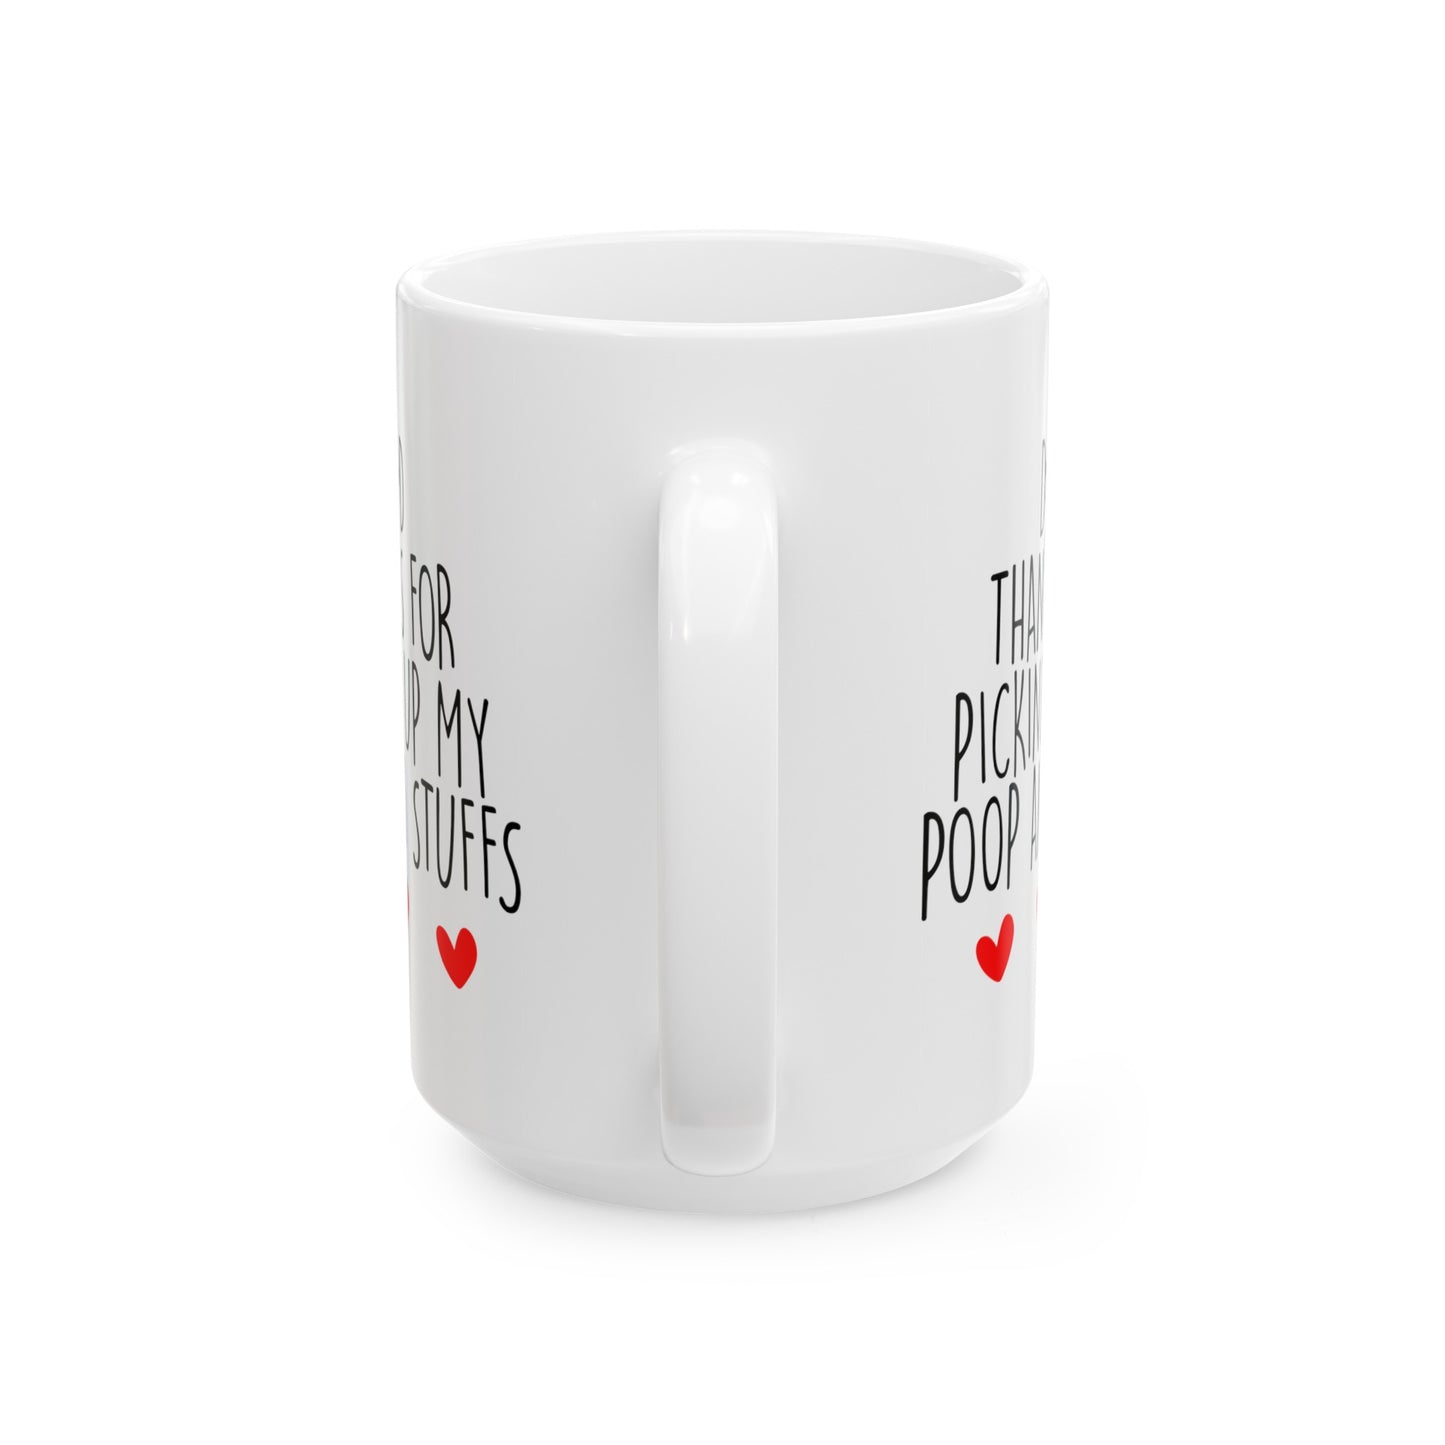 Dog Poop Coffee Mug - Double Sided White Ceramic 15oz by TheGlassyLass.com